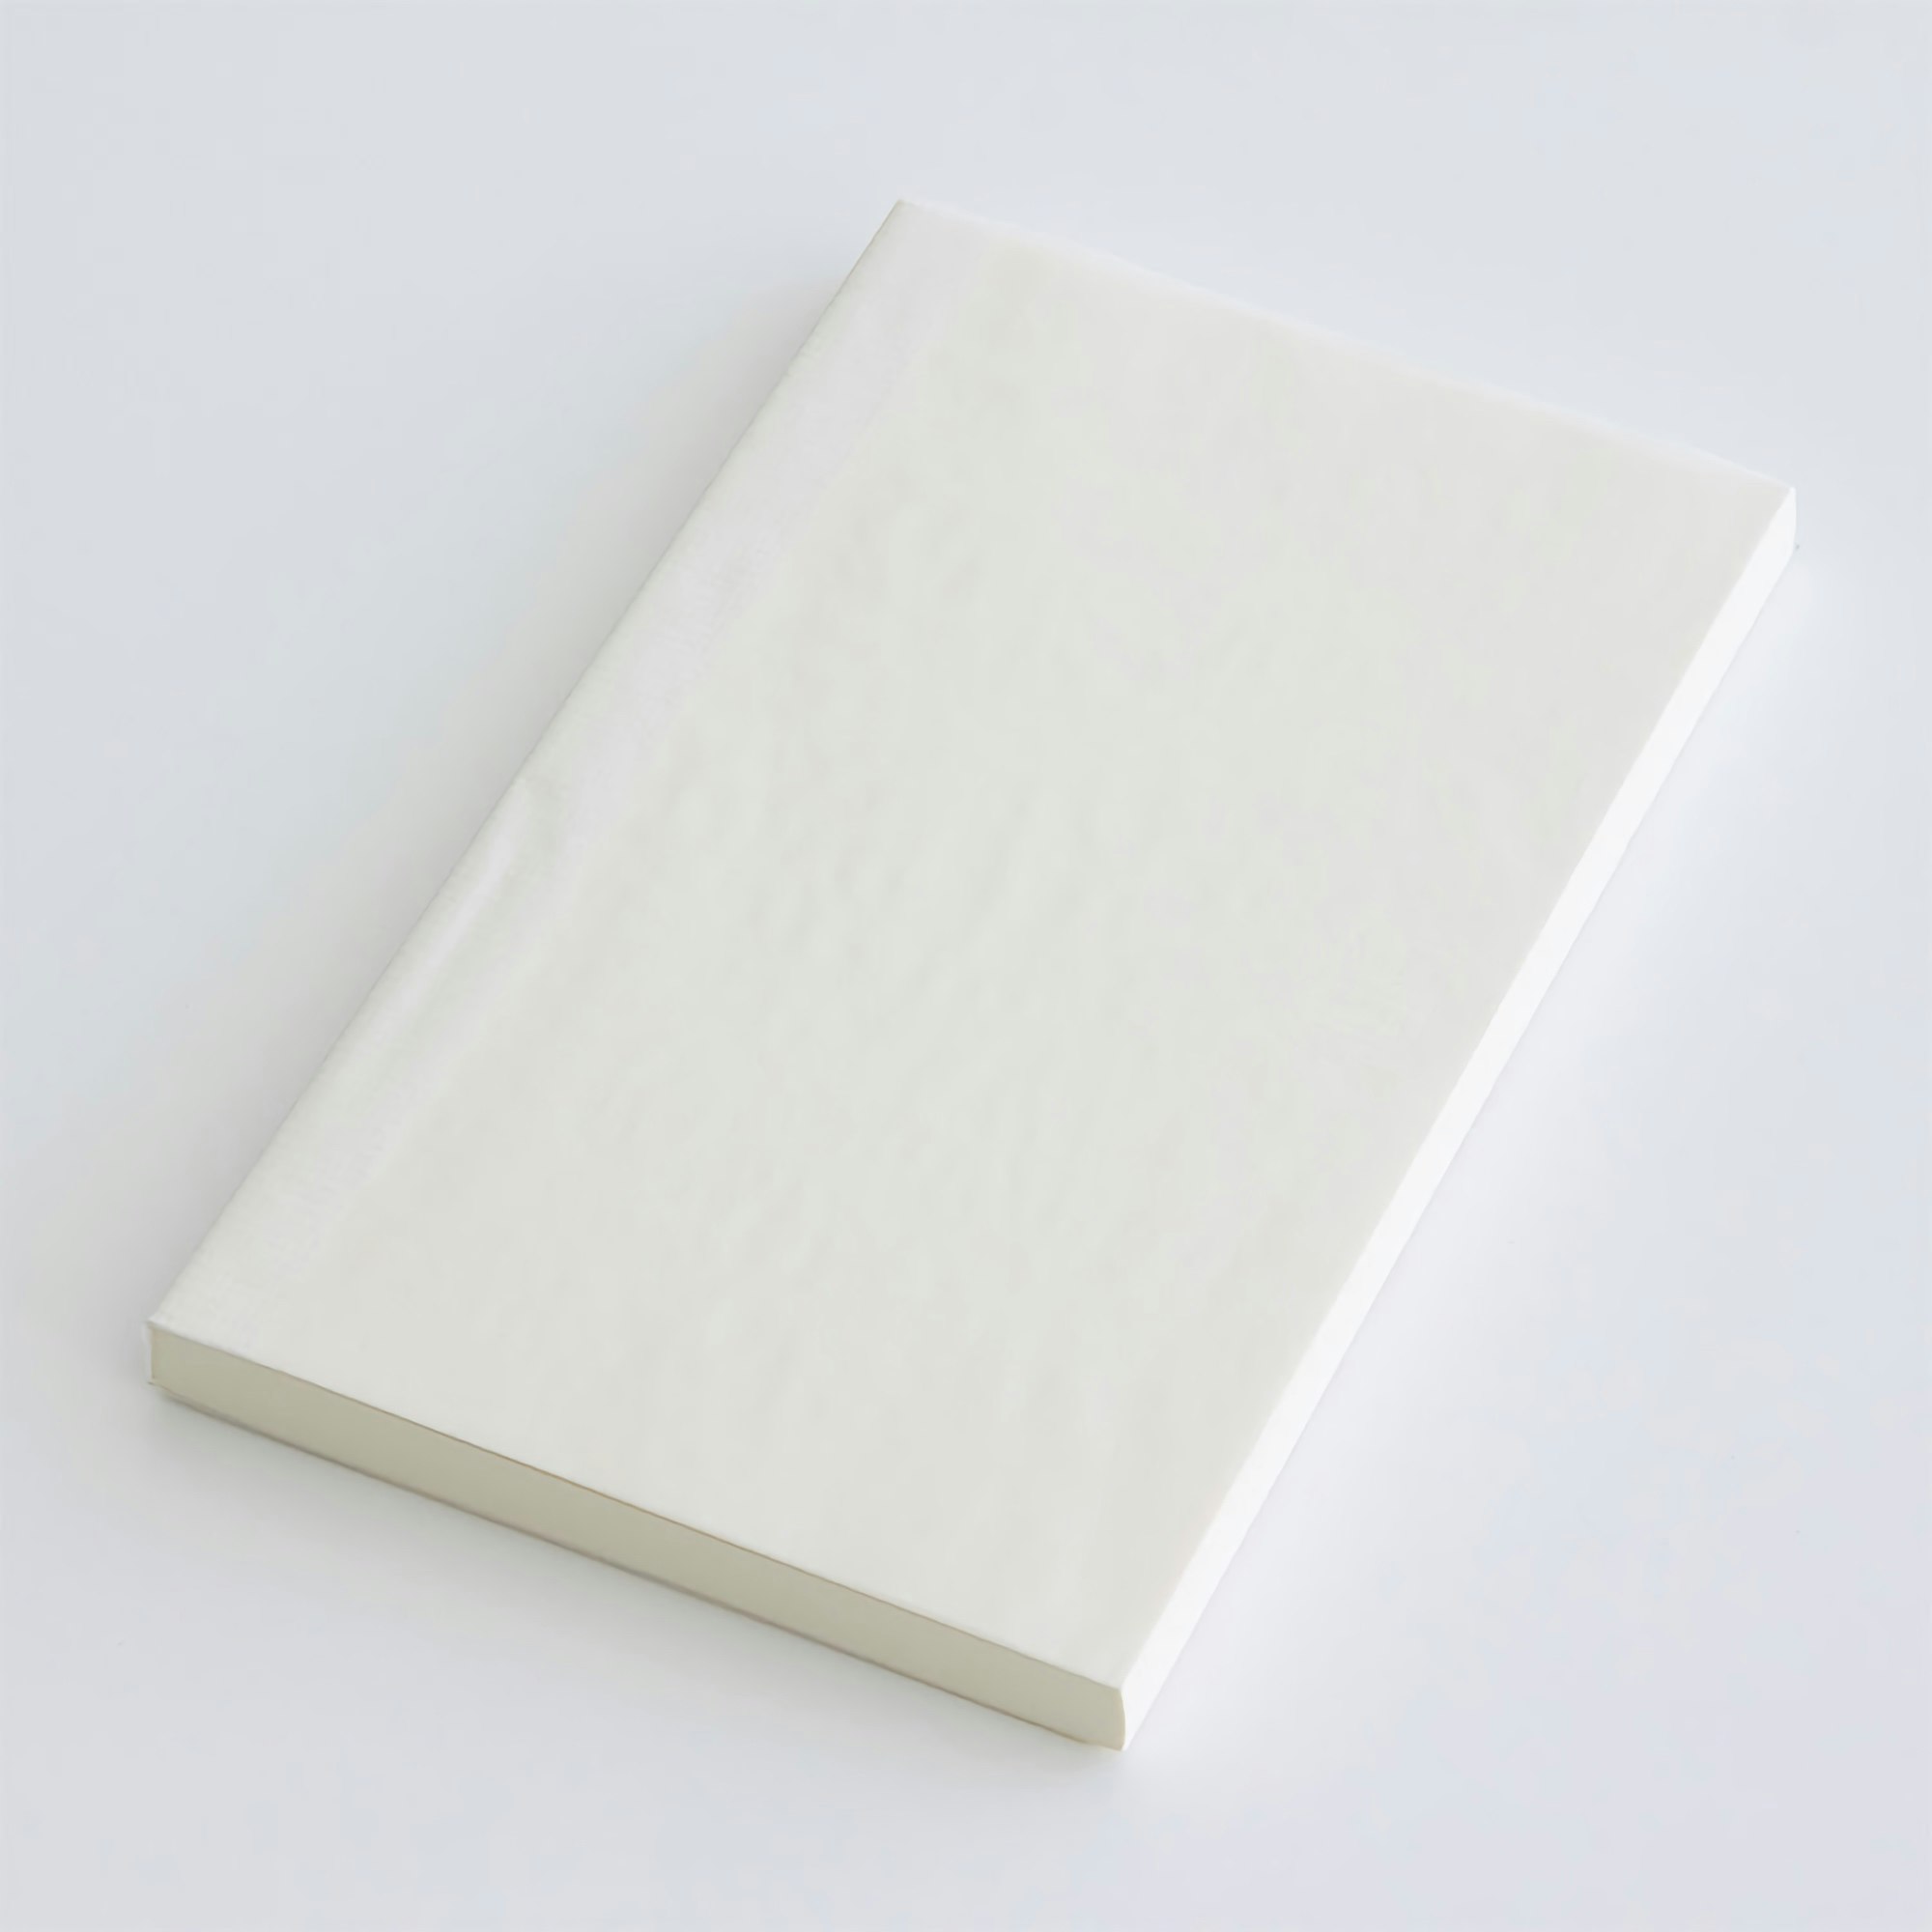 Midori MD Notebook [B6 Slim] Blank